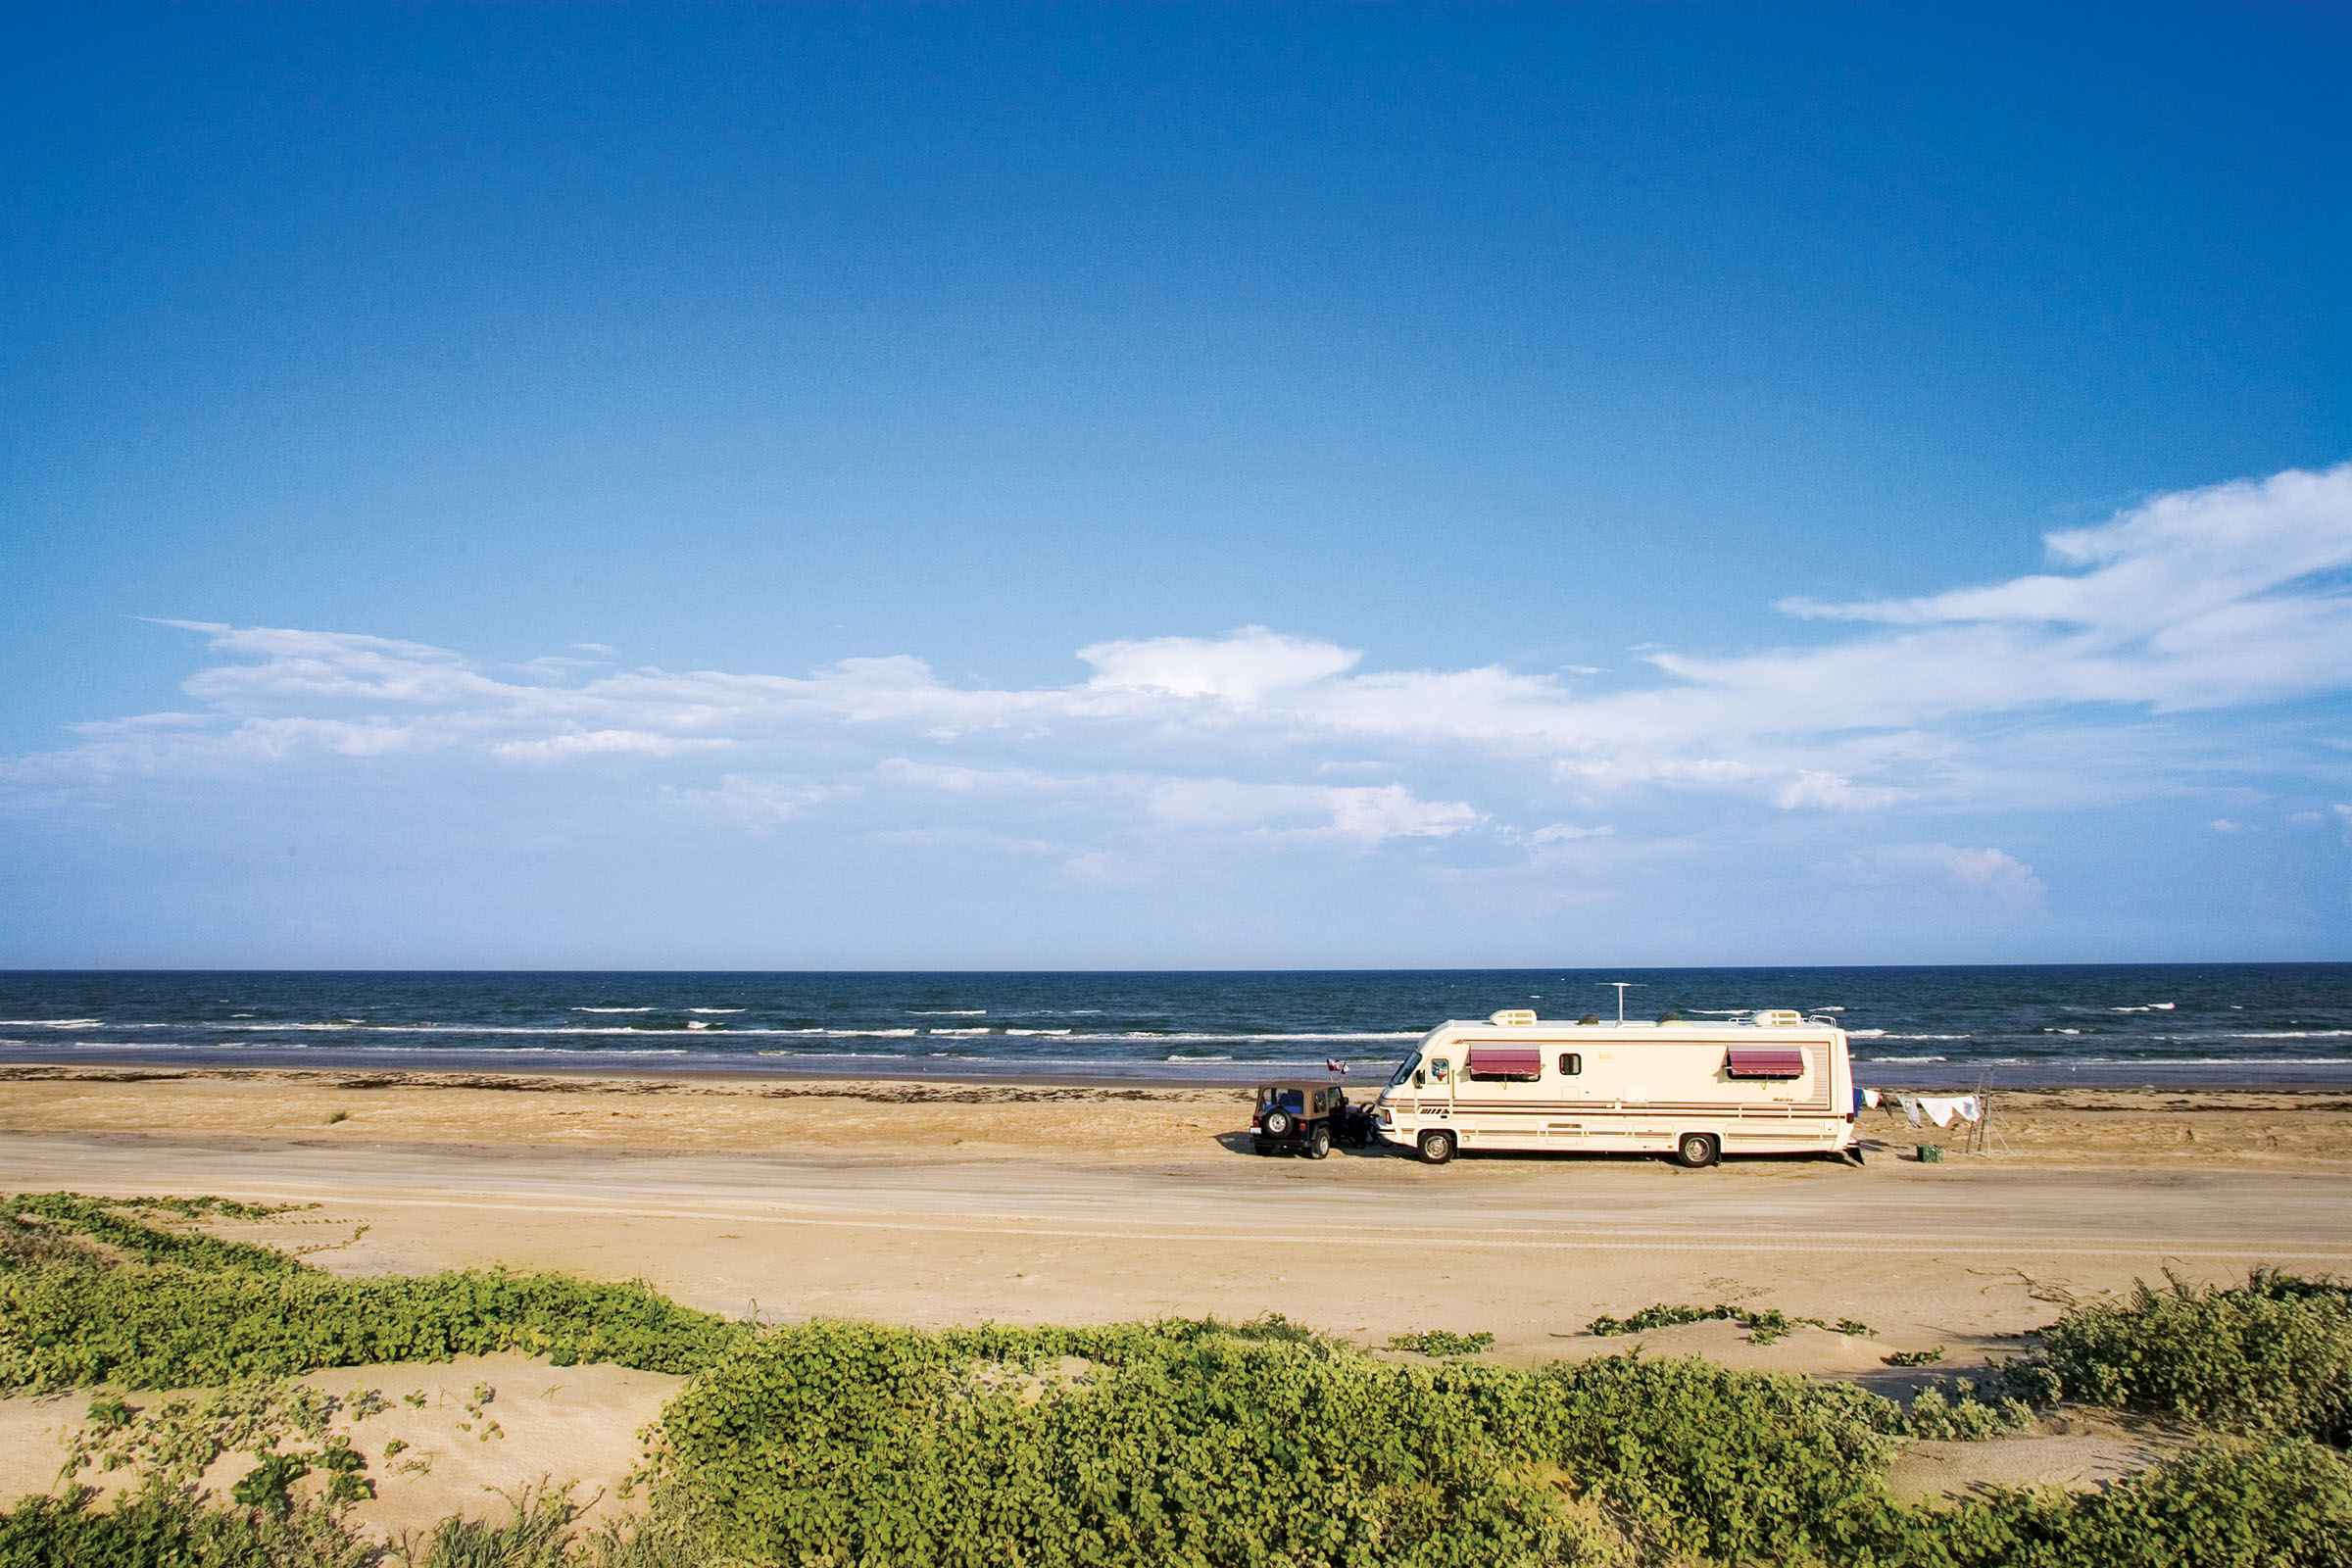 An RV is pulled behind a truck along a sandy beach